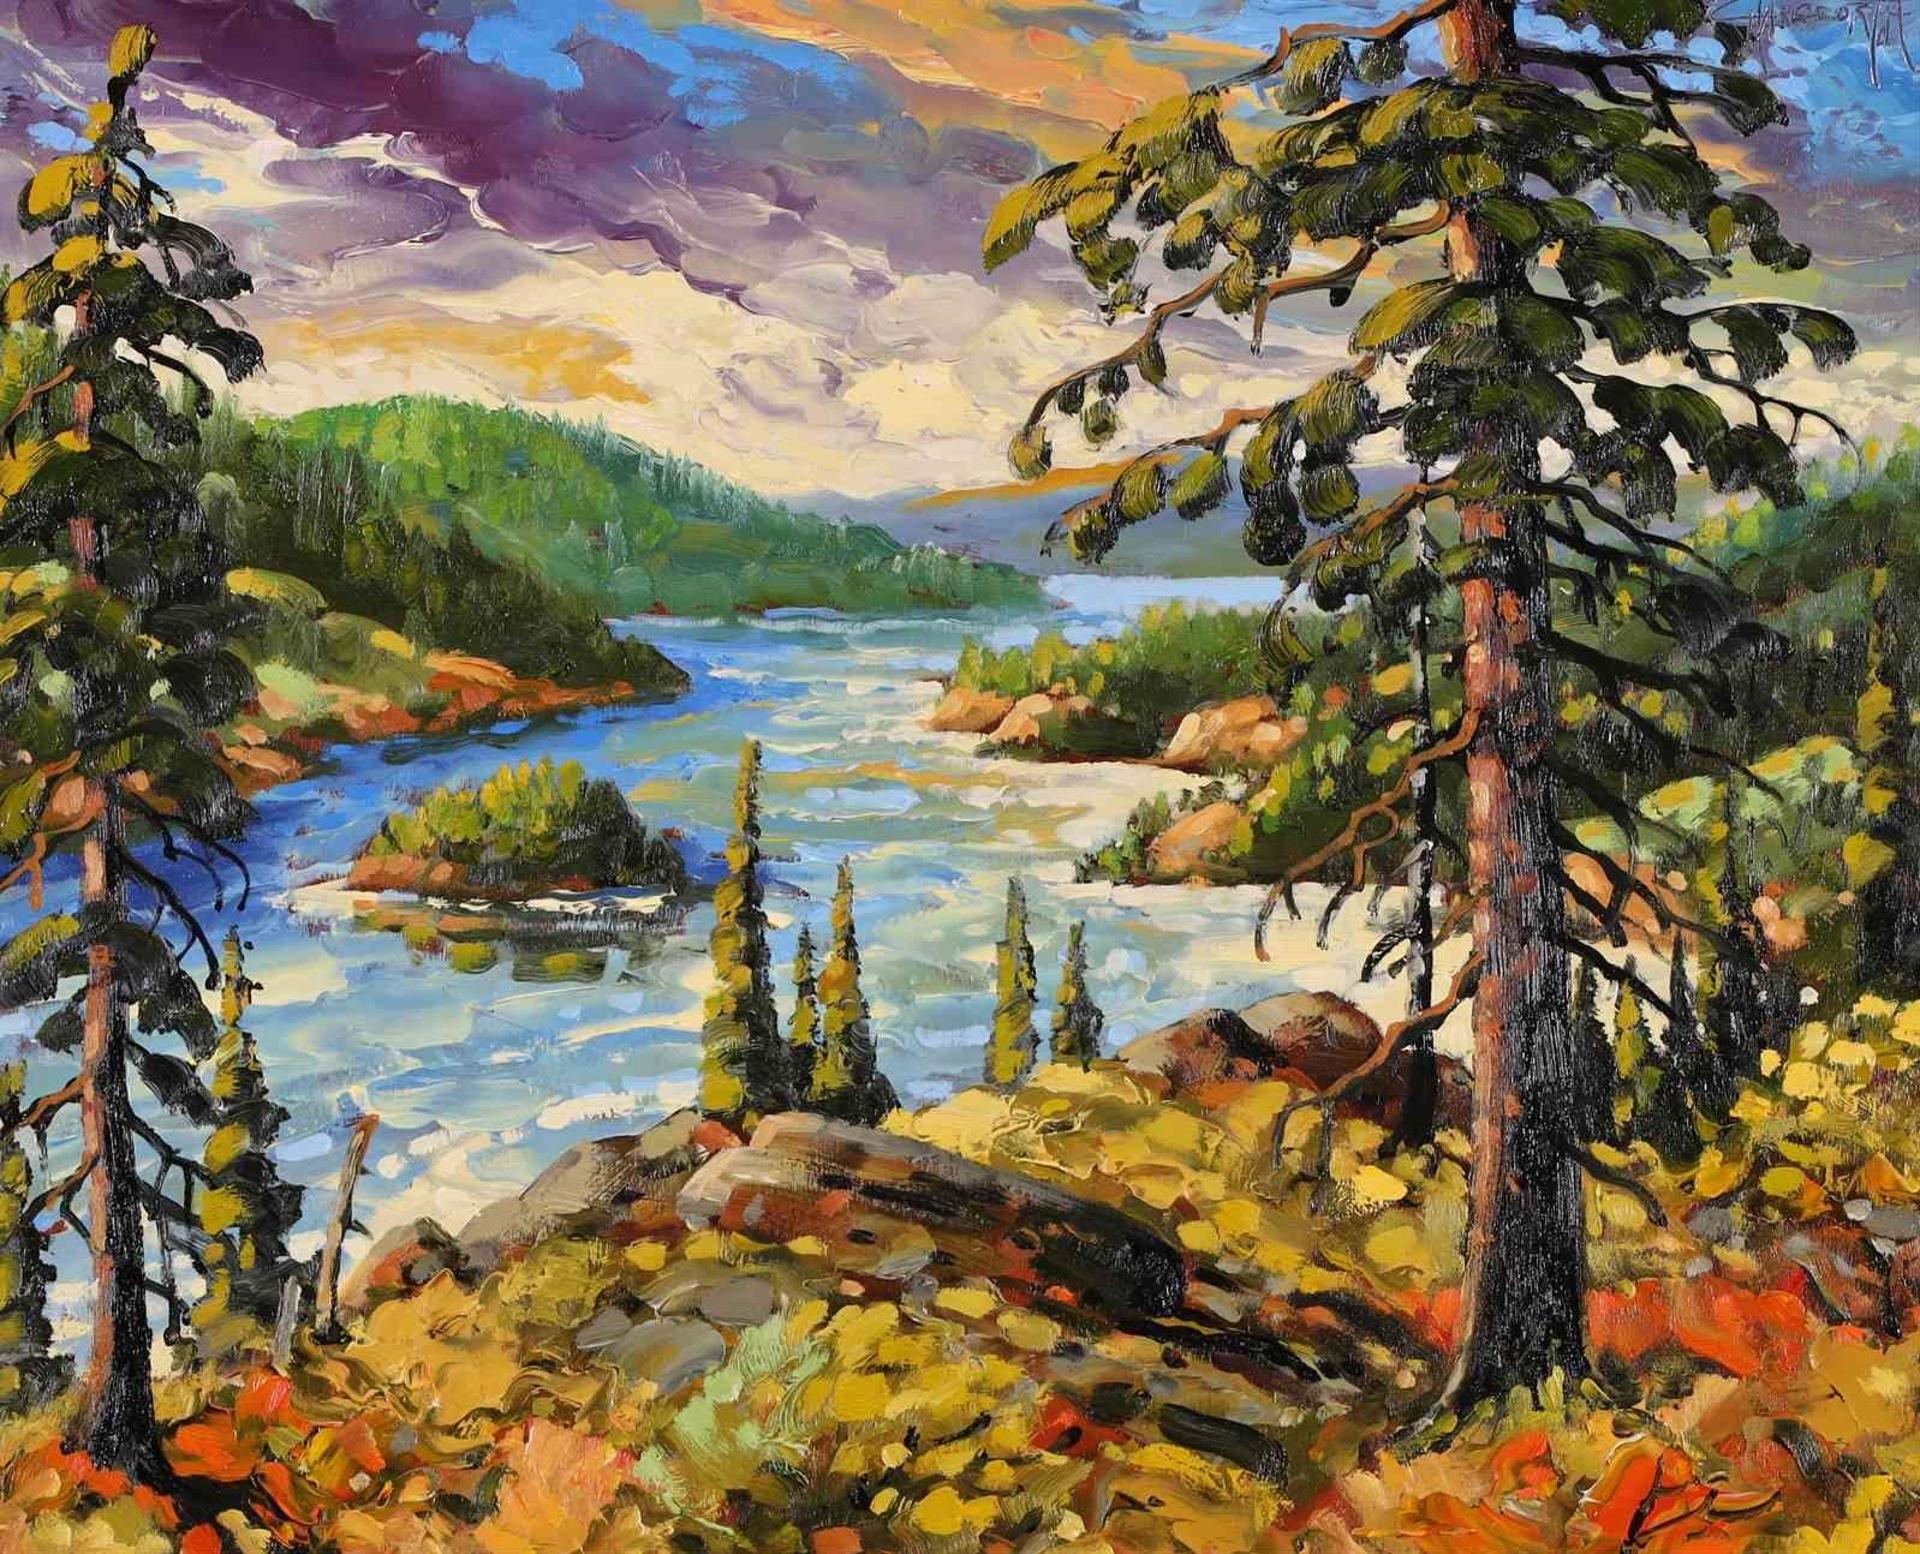 Rod Charlesworth (1955) - Down By The Yukon River